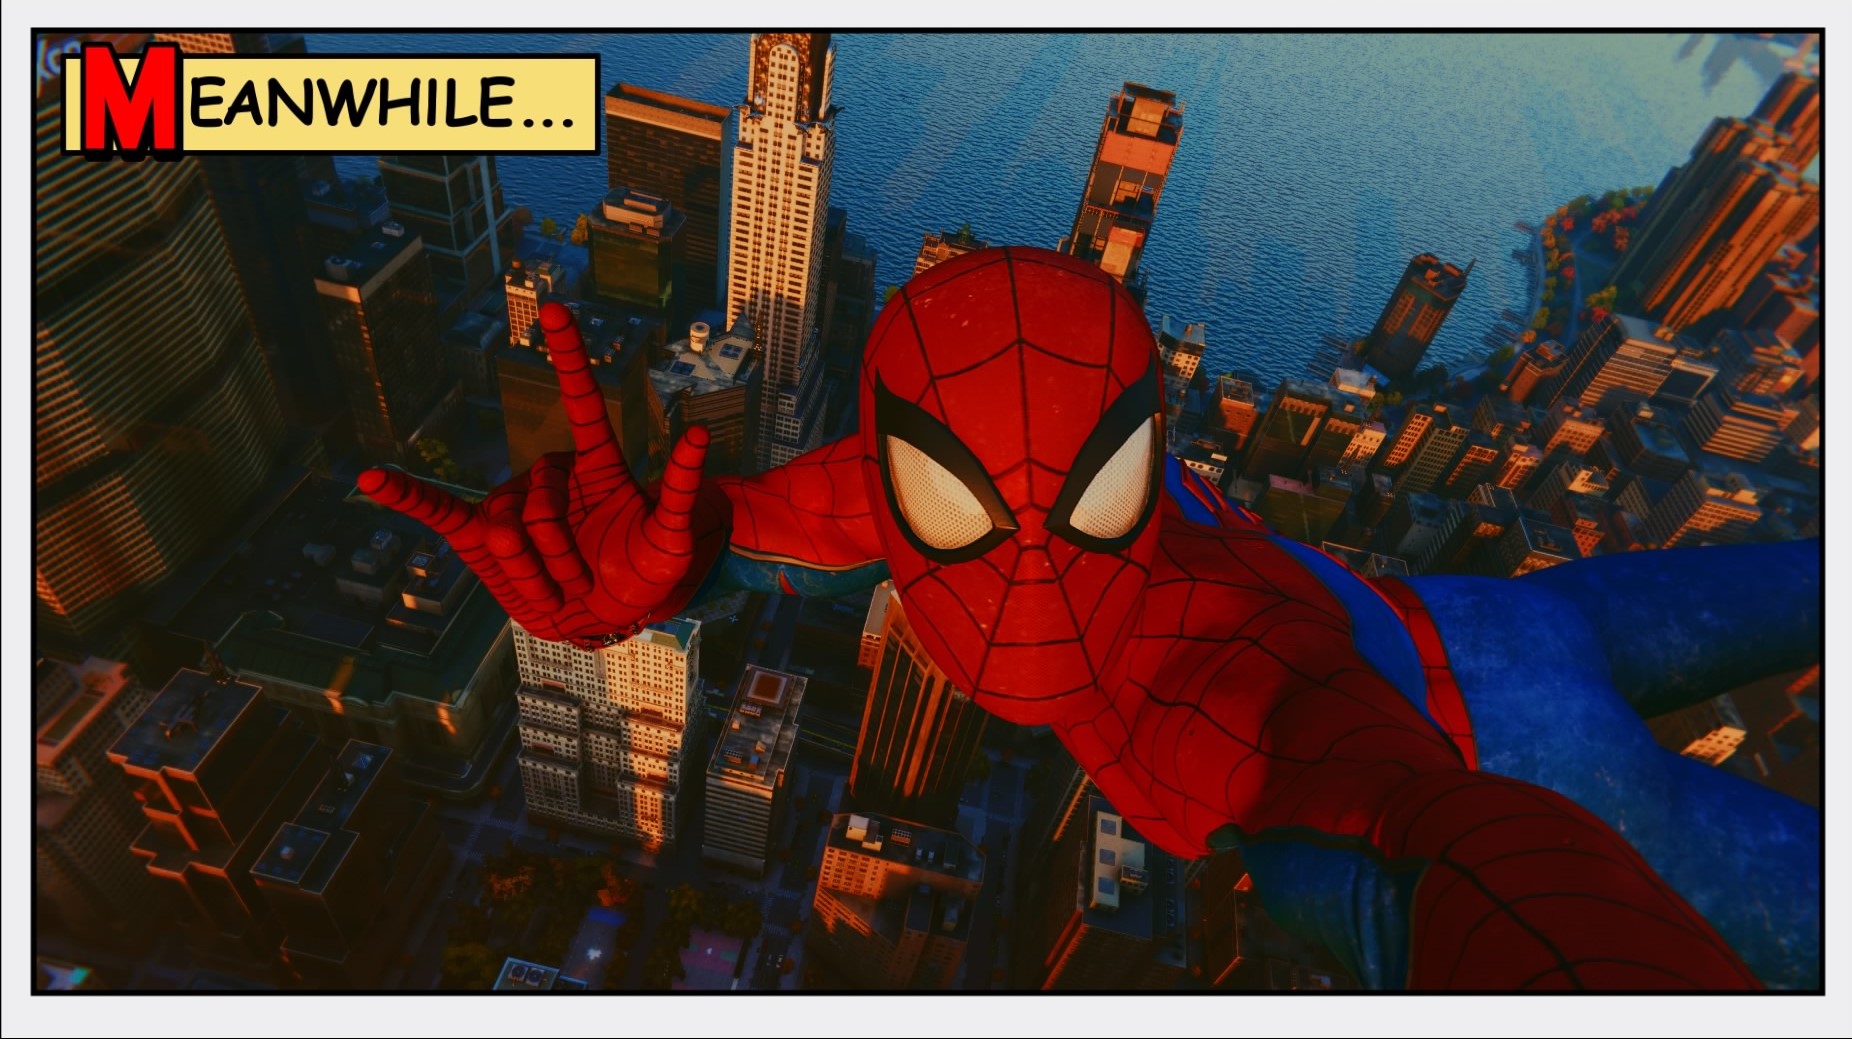 Marvel's spider-man